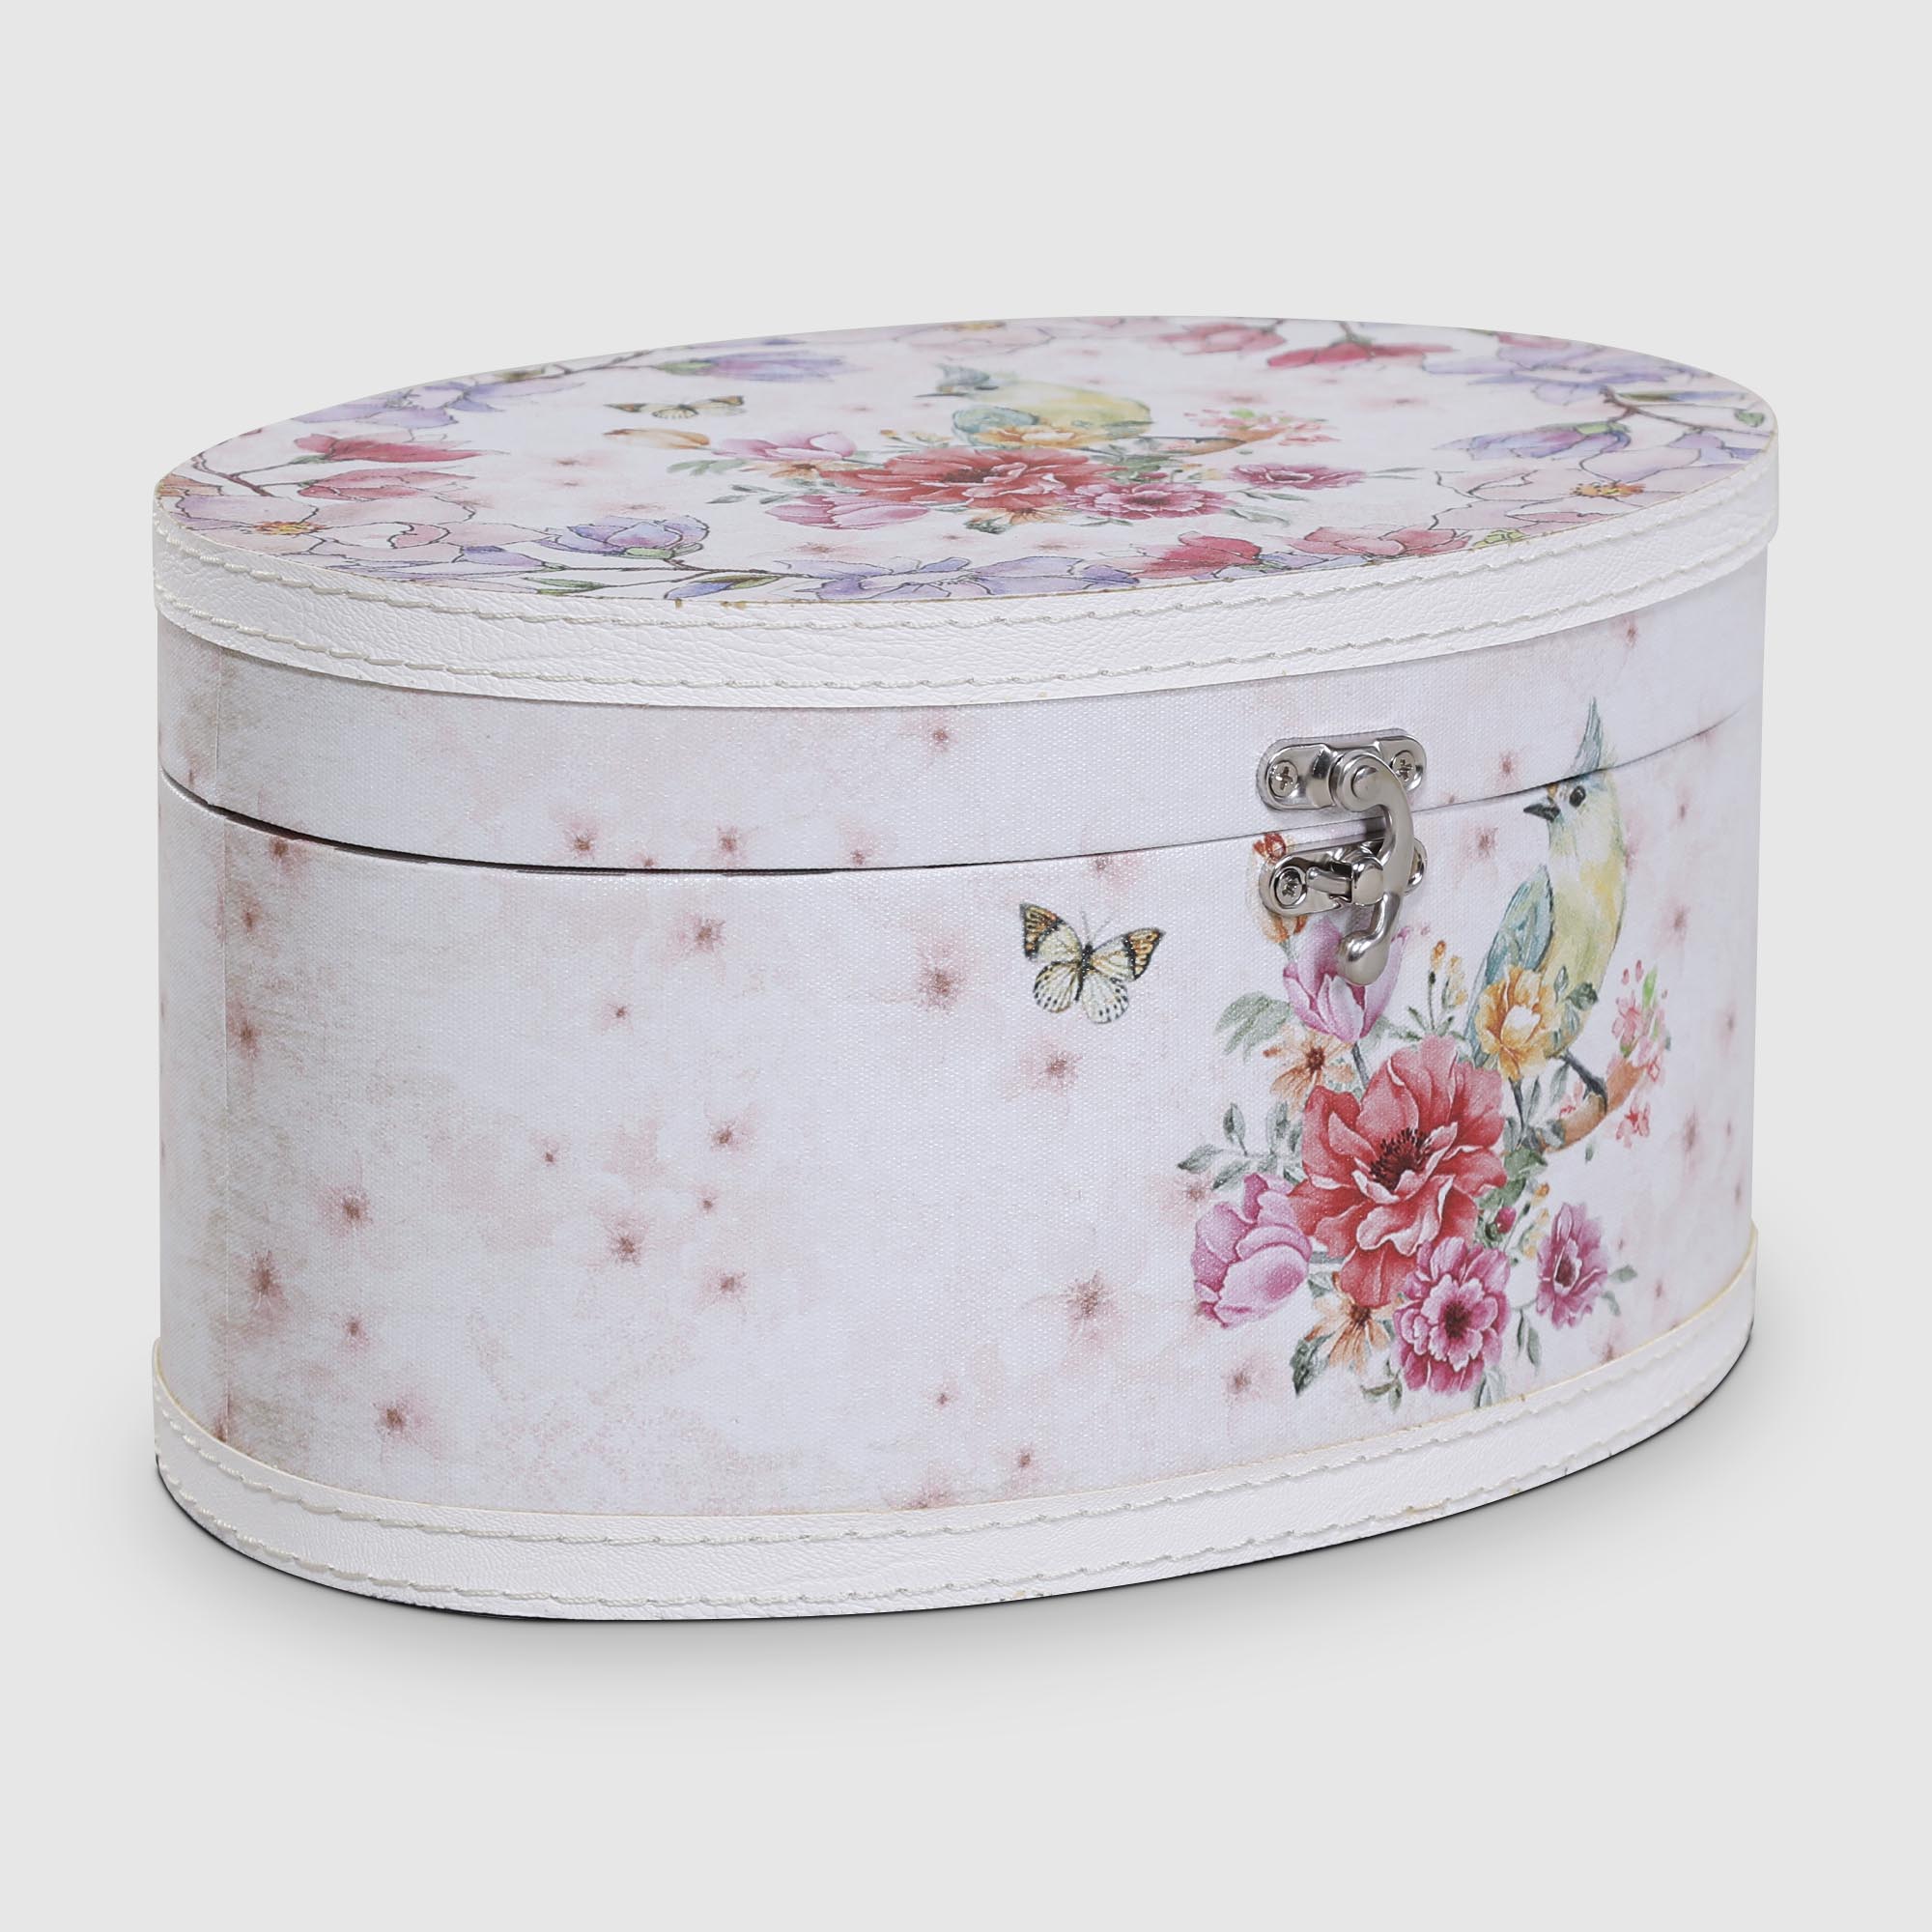 Шкатулка Fuzhou star Цветение, белая с розовыми цветами, 26,3х19,5х13,3 см шкатулка книга дерево кожзам